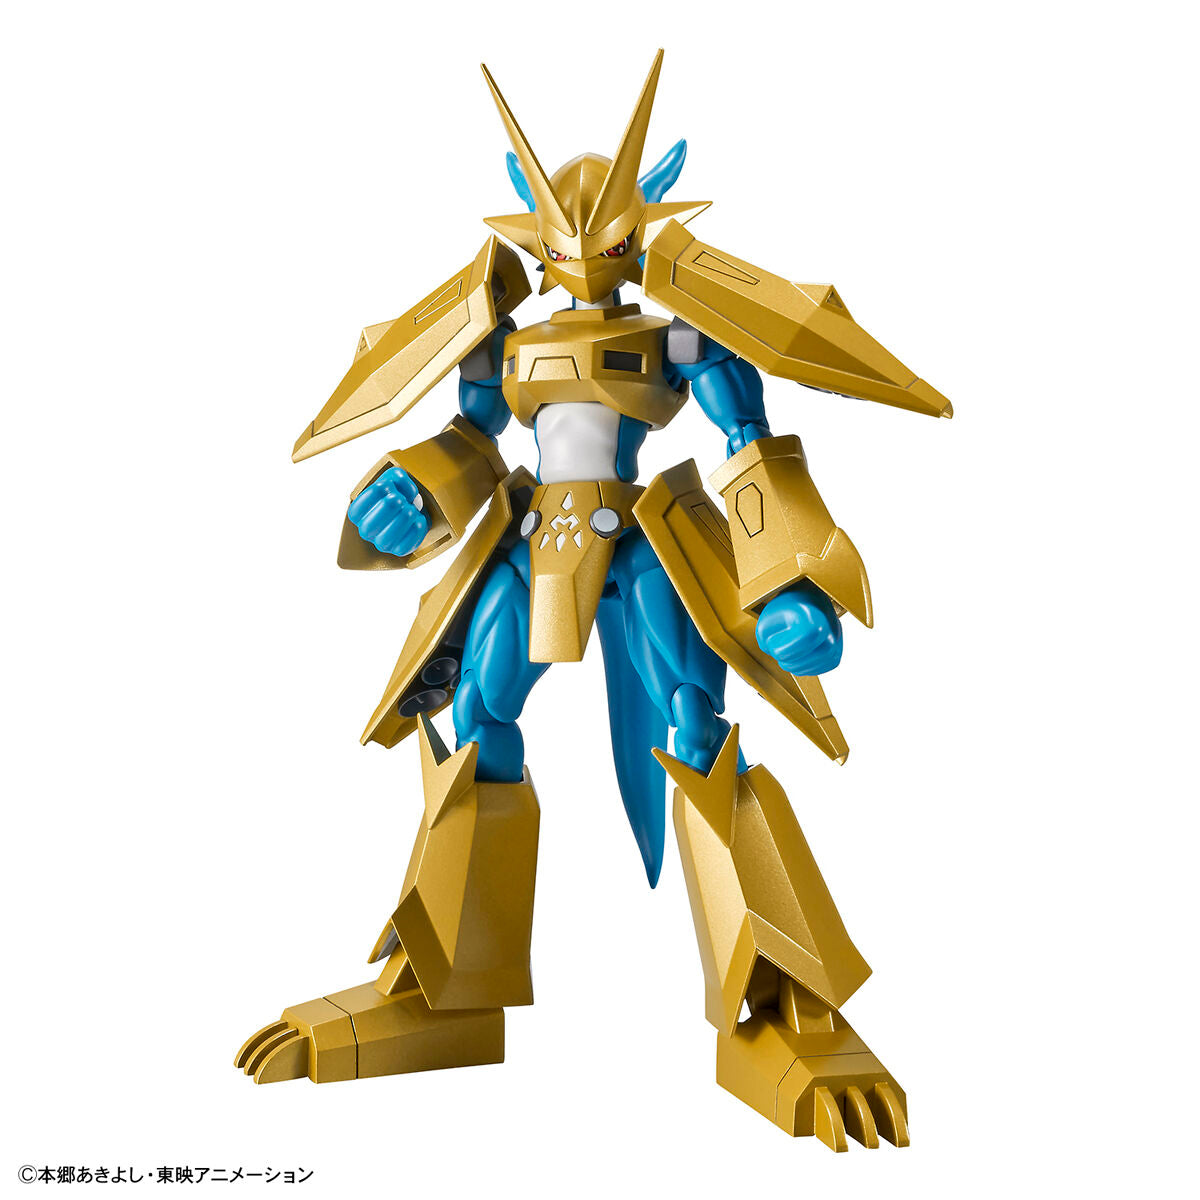 Digimon – Figurenartiges Standard-Magnamon